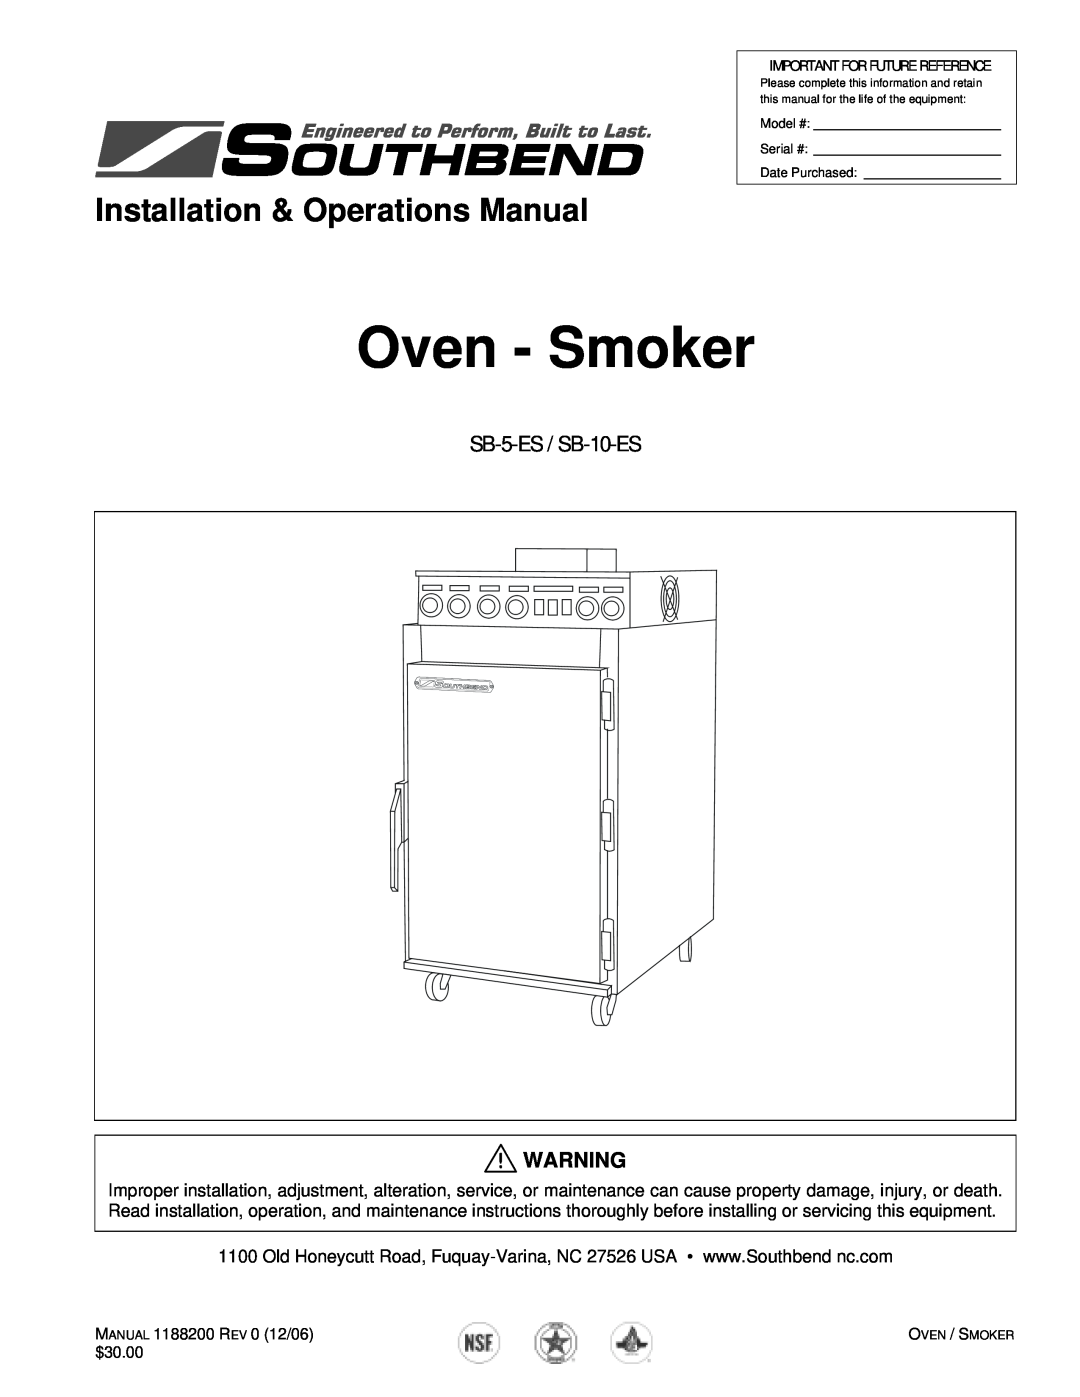 Southbend manual Oven - Smoker, Installation & Operations Manual, SB-5-ES / SB-10-ES 